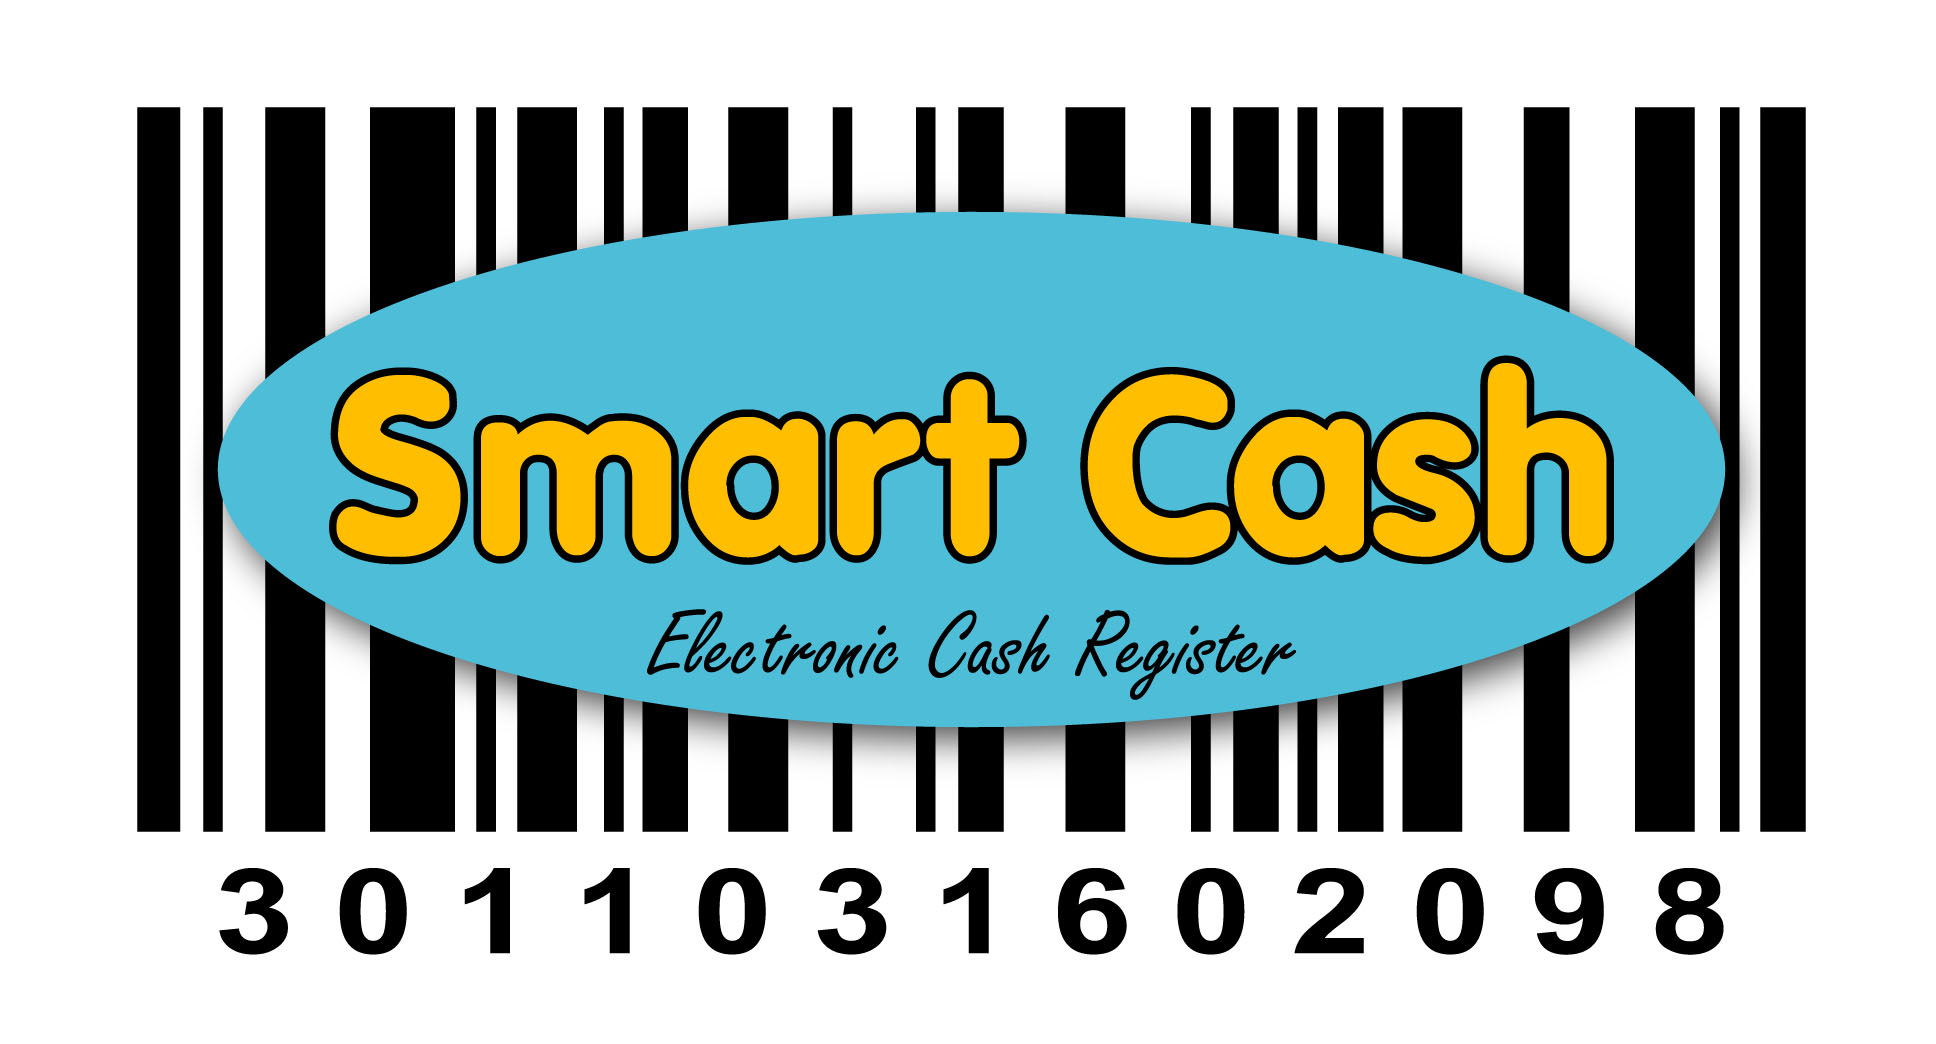 Smart Cash logo.jpg